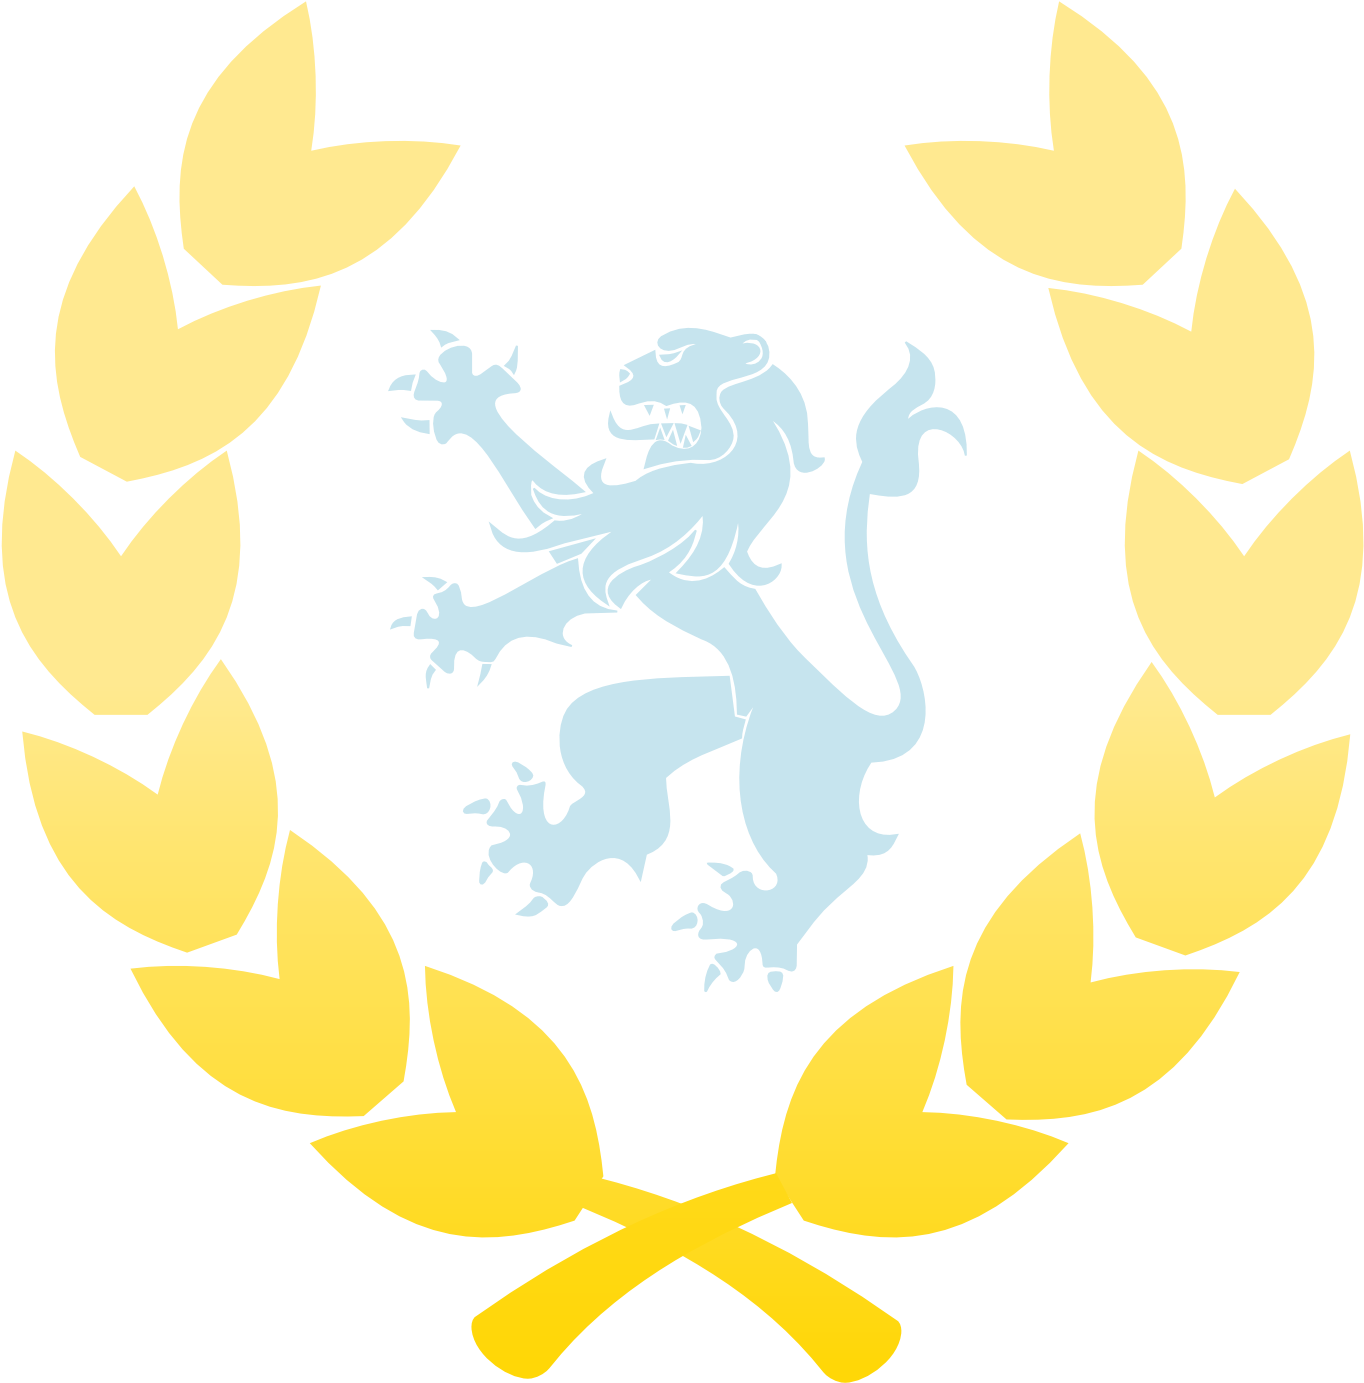 Lionand Laurel Wreath Emblem PNG image